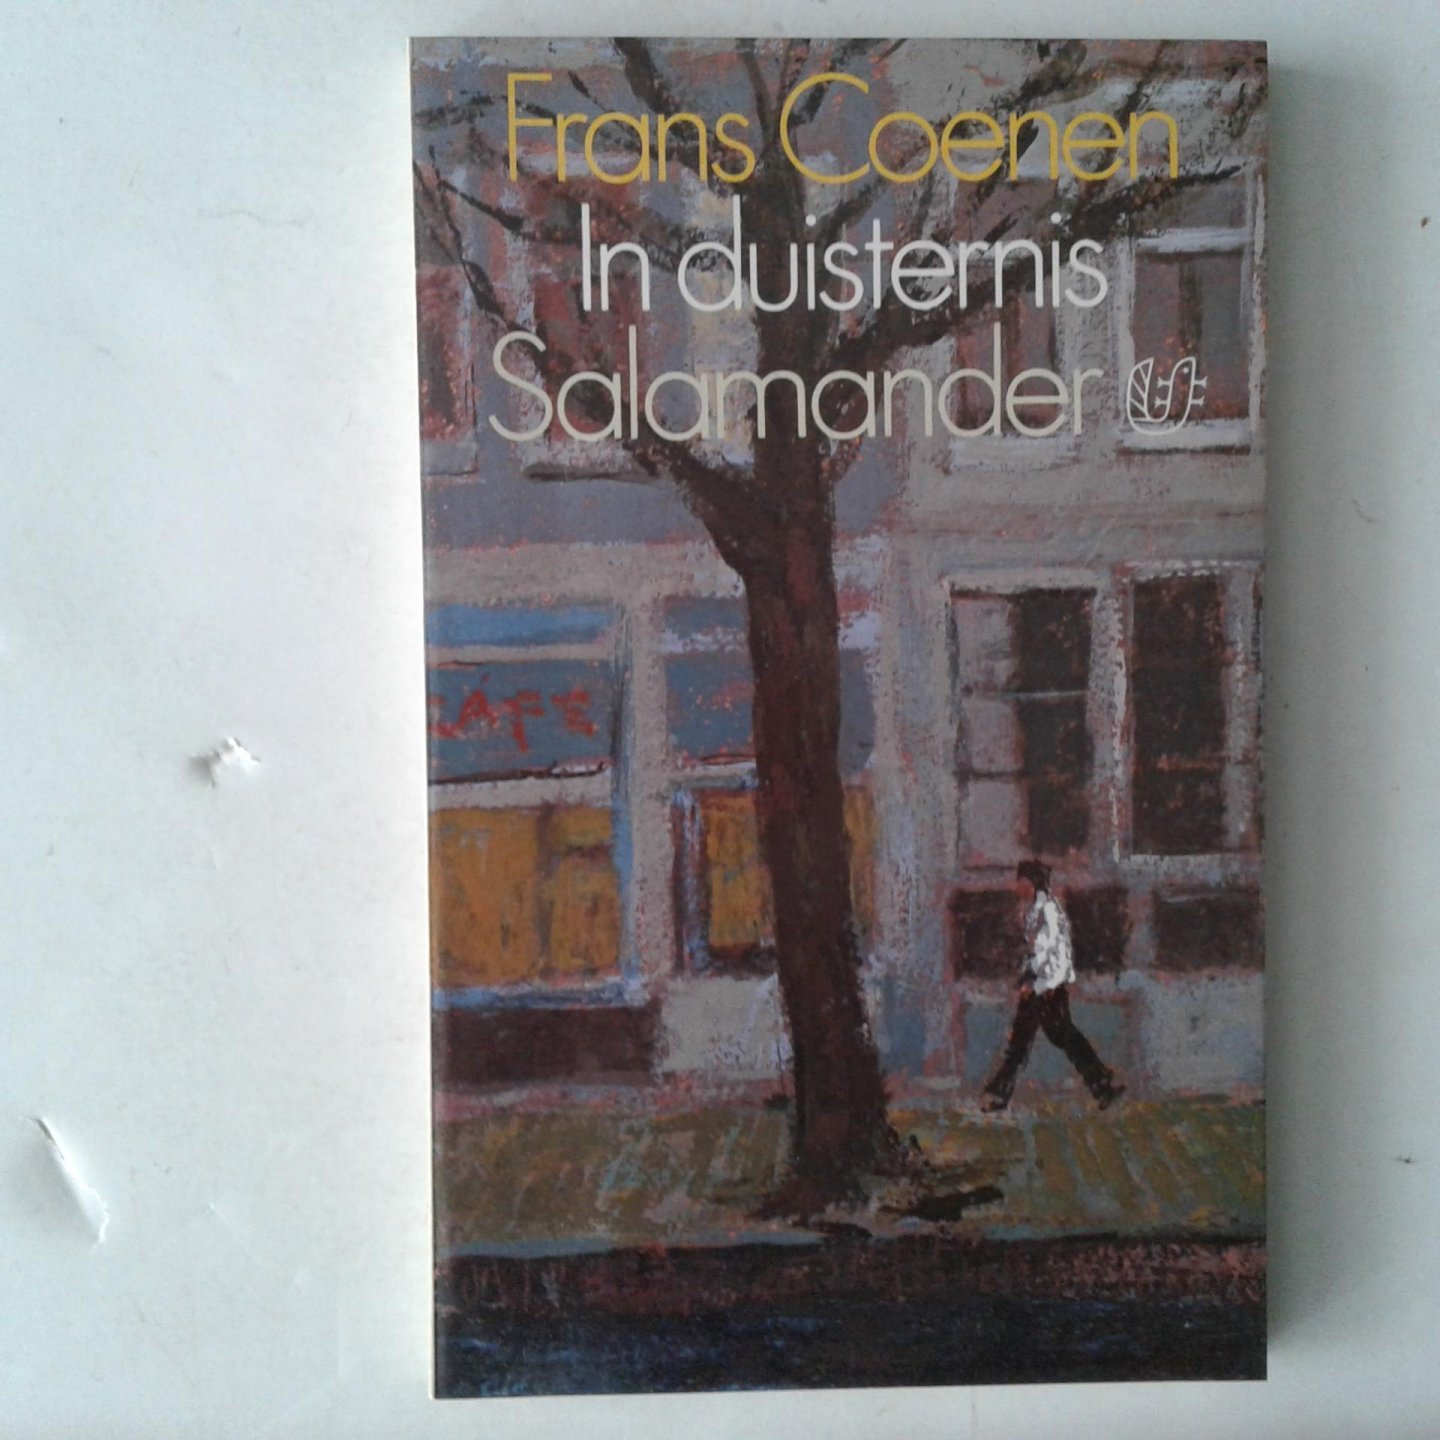 Coenen, Frans - In duisternis